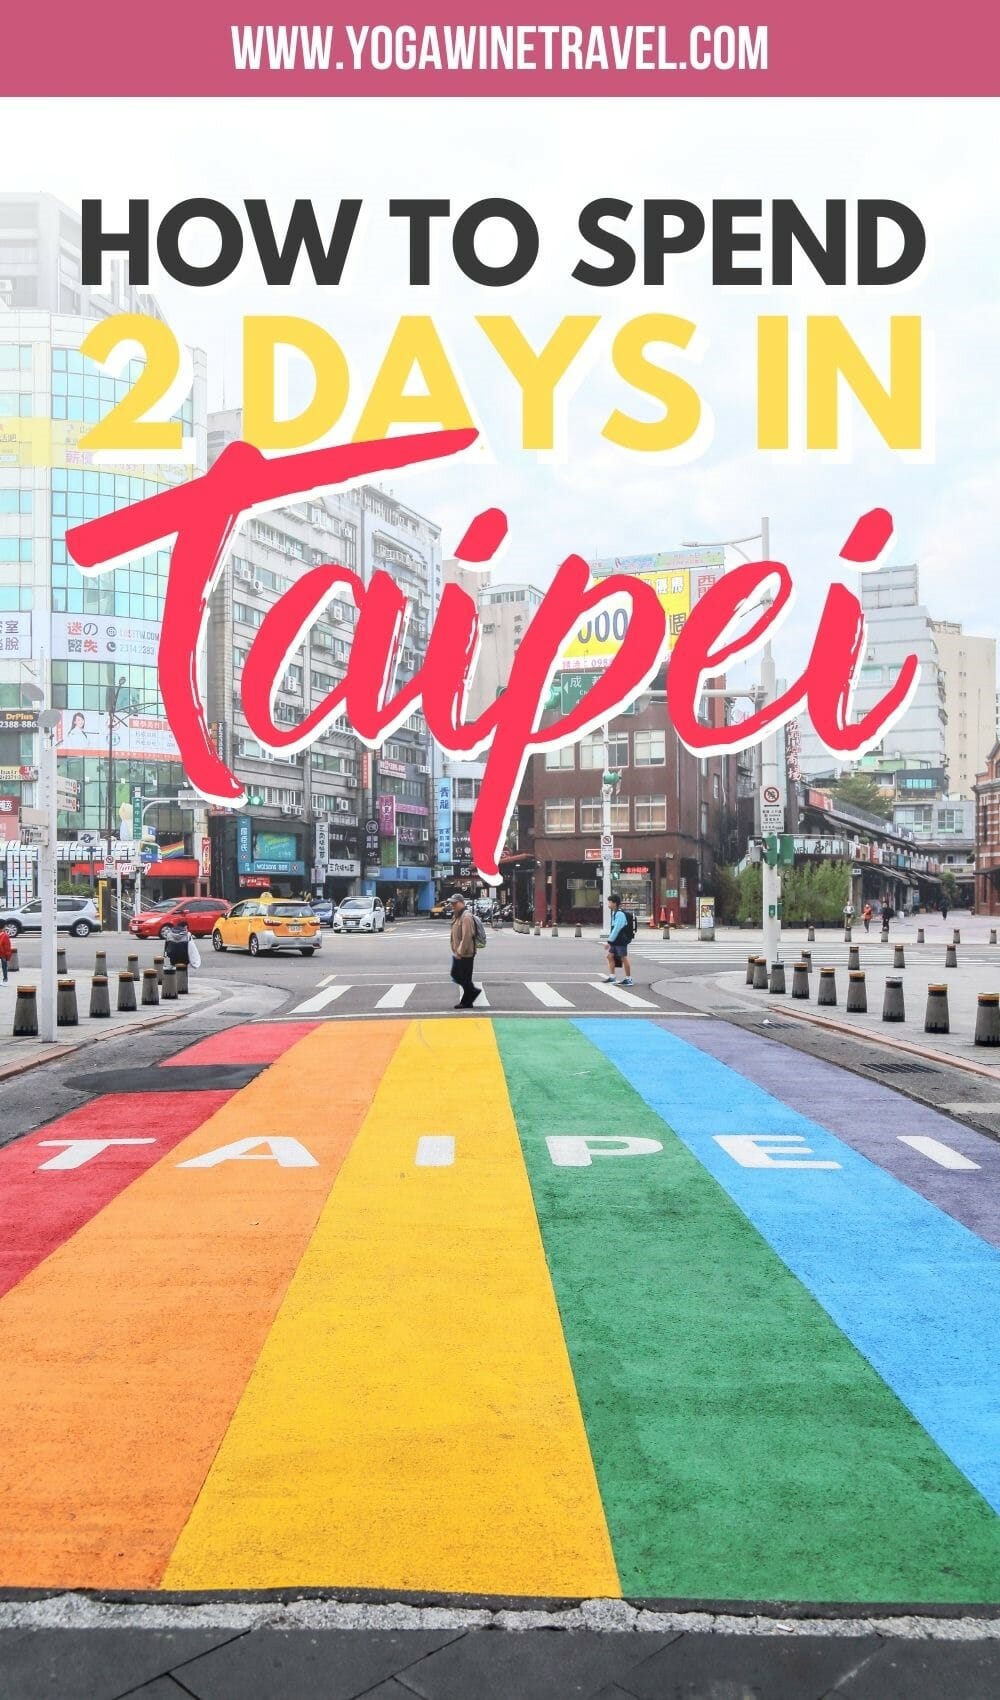 Rainbow street in Taipei Taiwan with text overlay